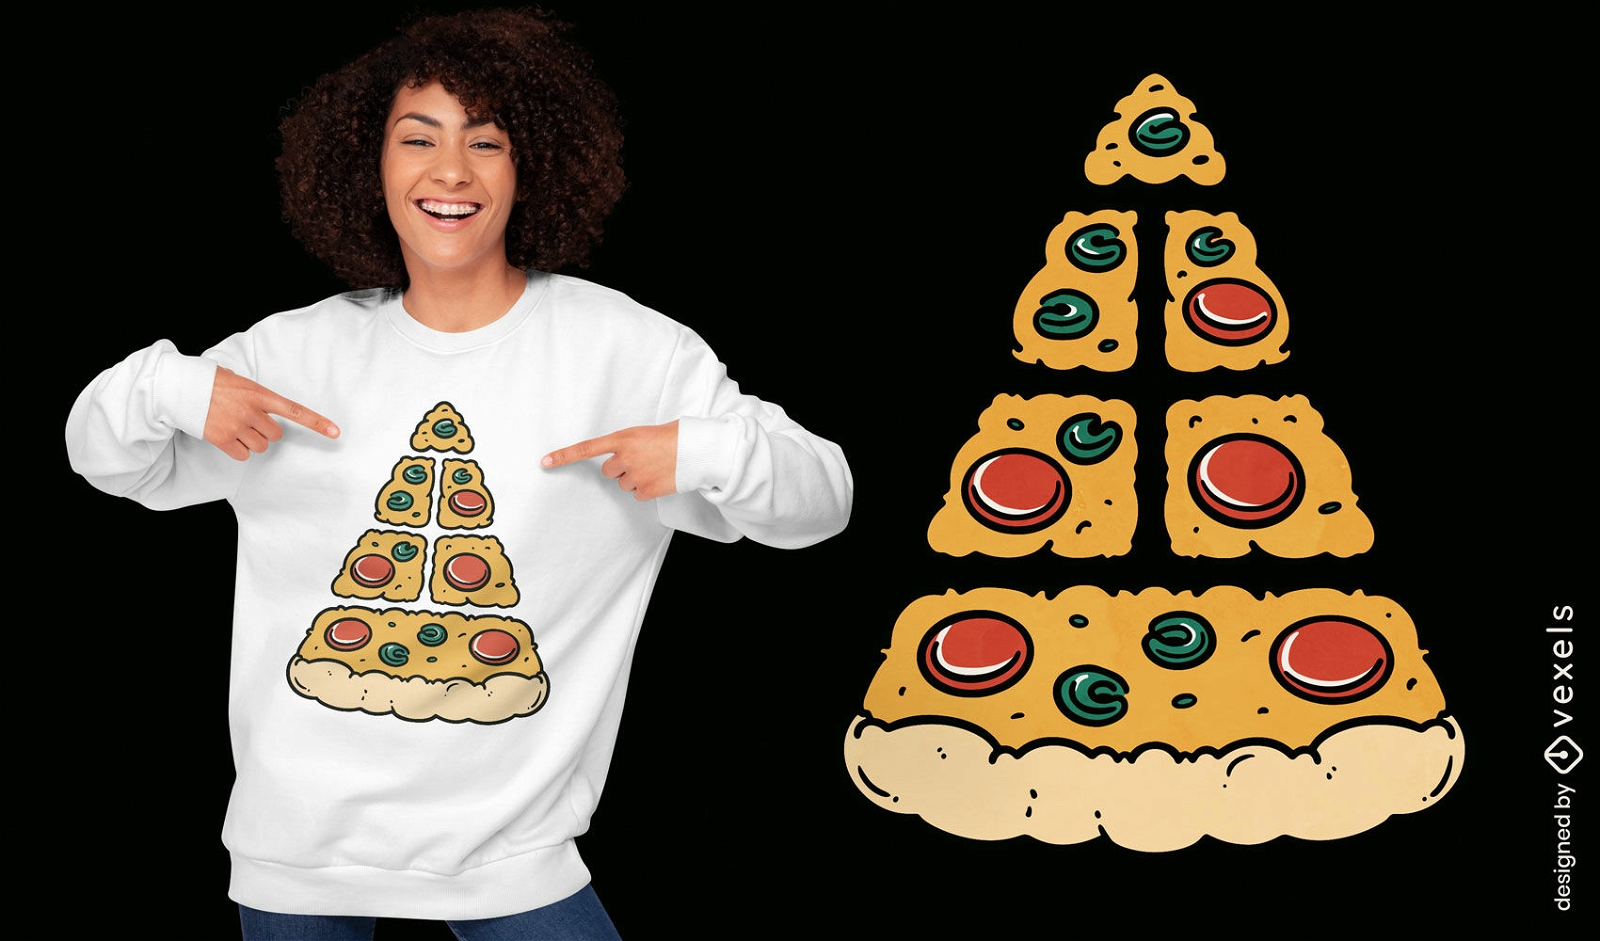 Dise?o de camiseta de comida r?pida de pir?mide de pizza.